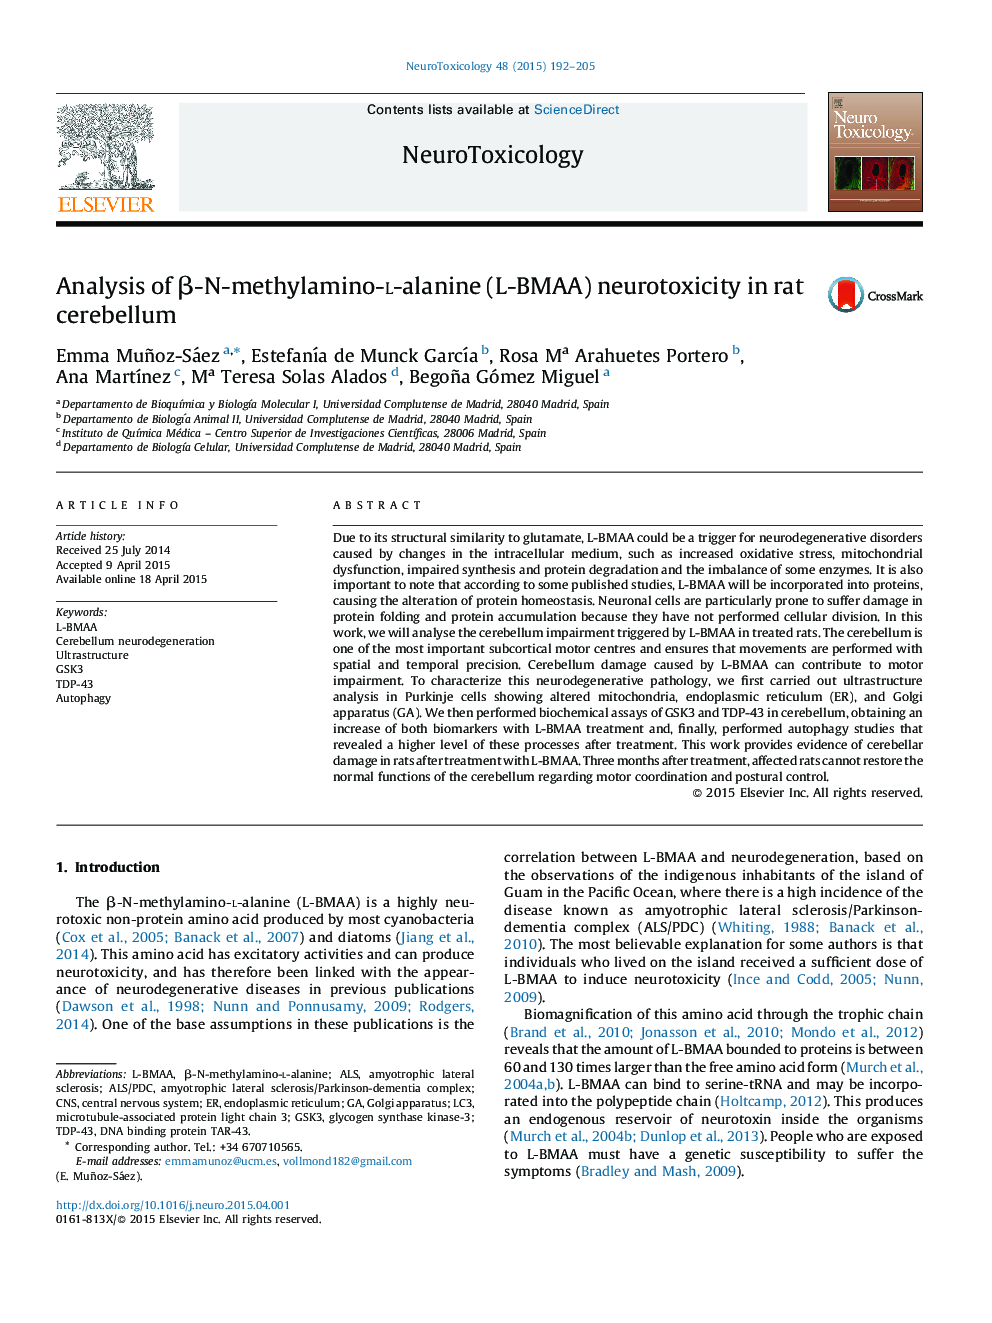 Analysis of β-N-methylamino-l-alanine (L-BMAA) neurotoxicity in rat cerebellum